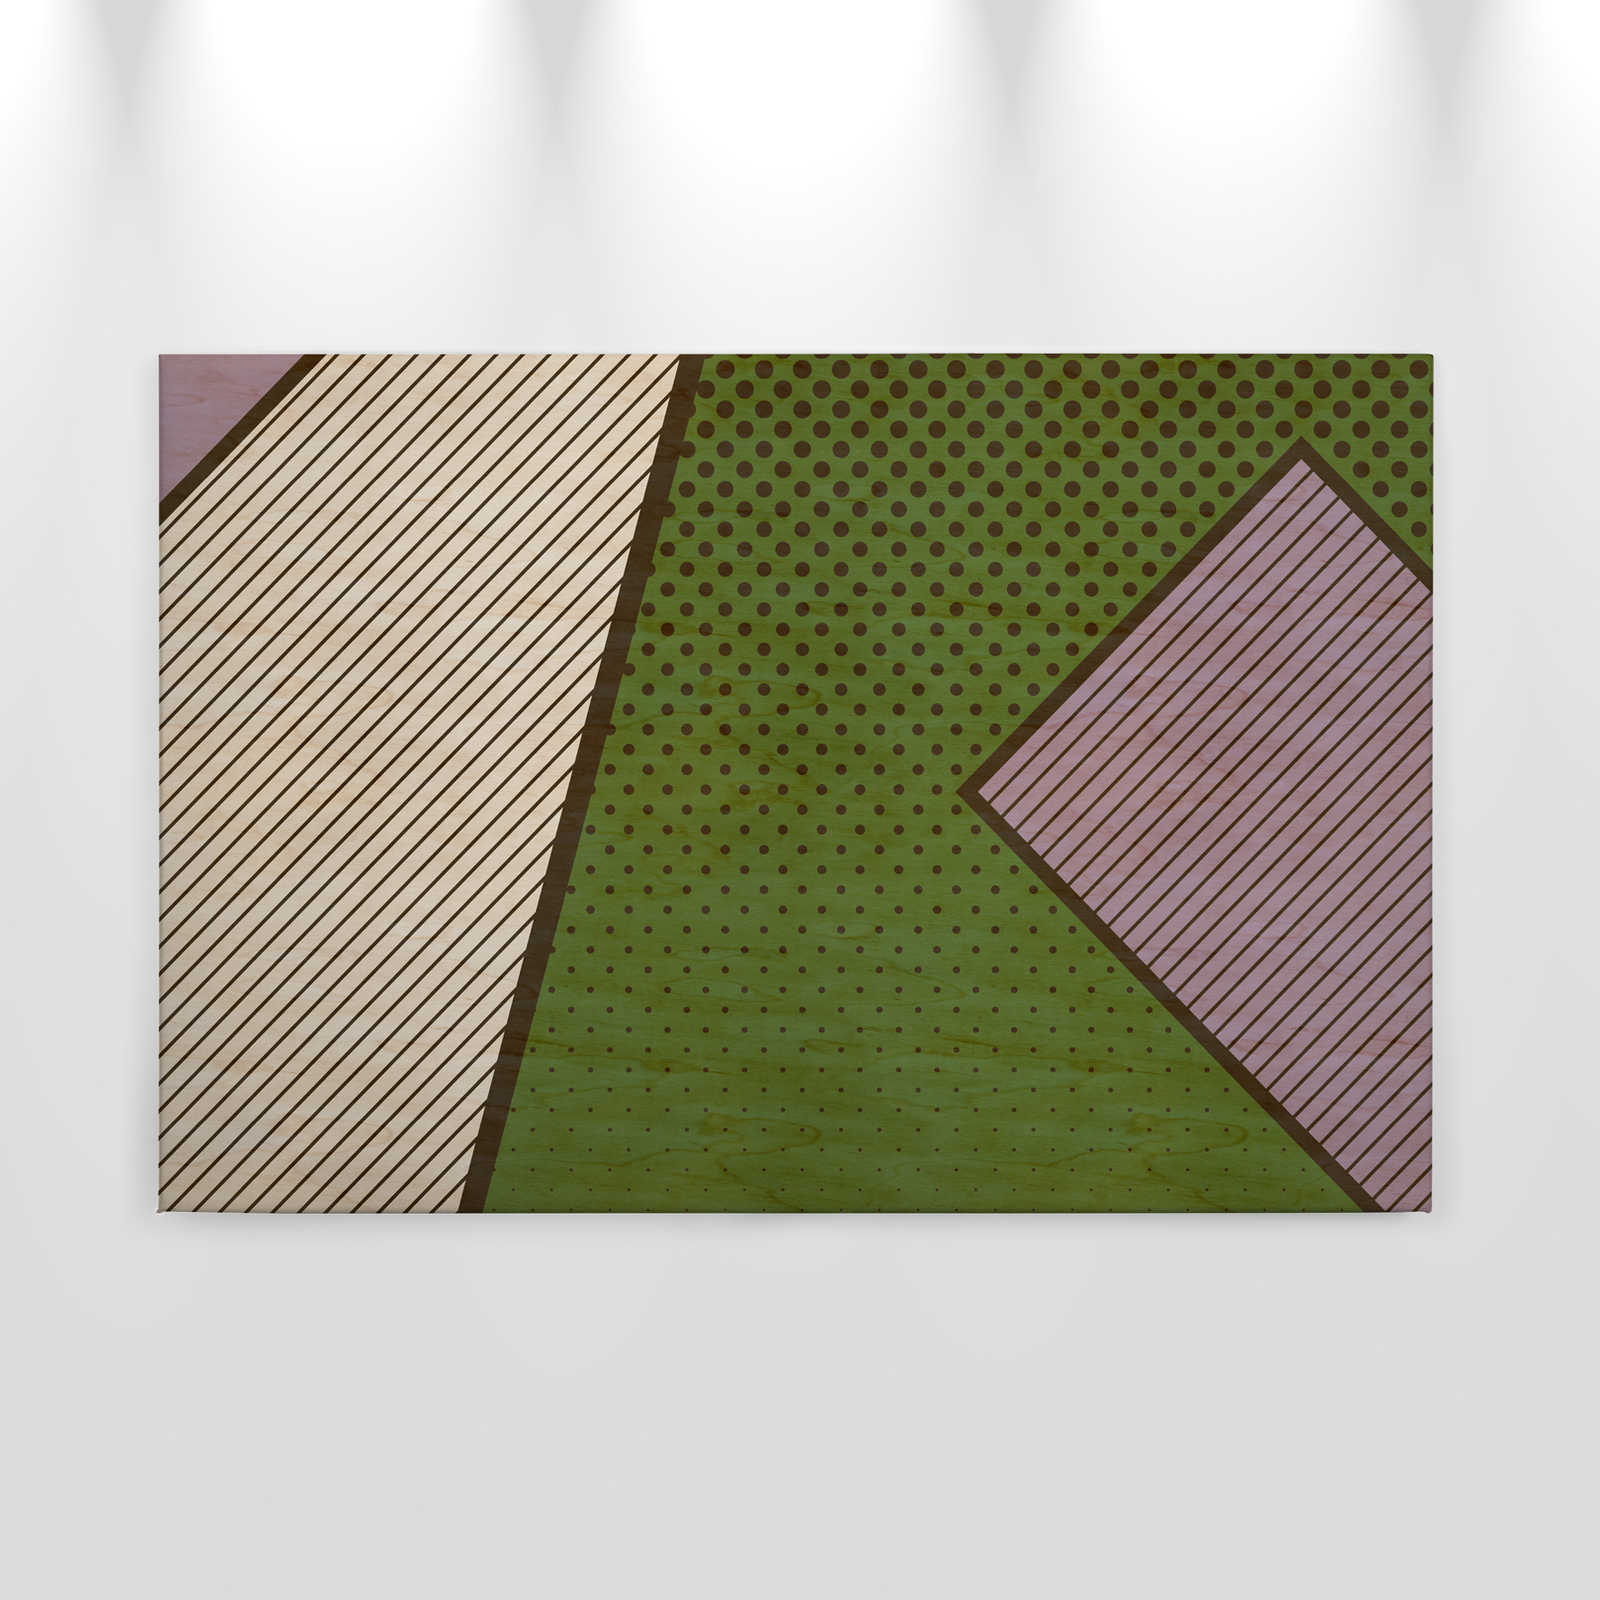             Bird gang 3 - Abstraktes Leinwandbild in Sperrholz Struktur mit bunte Farbflächen – 0,90 m x 0,60 m
        